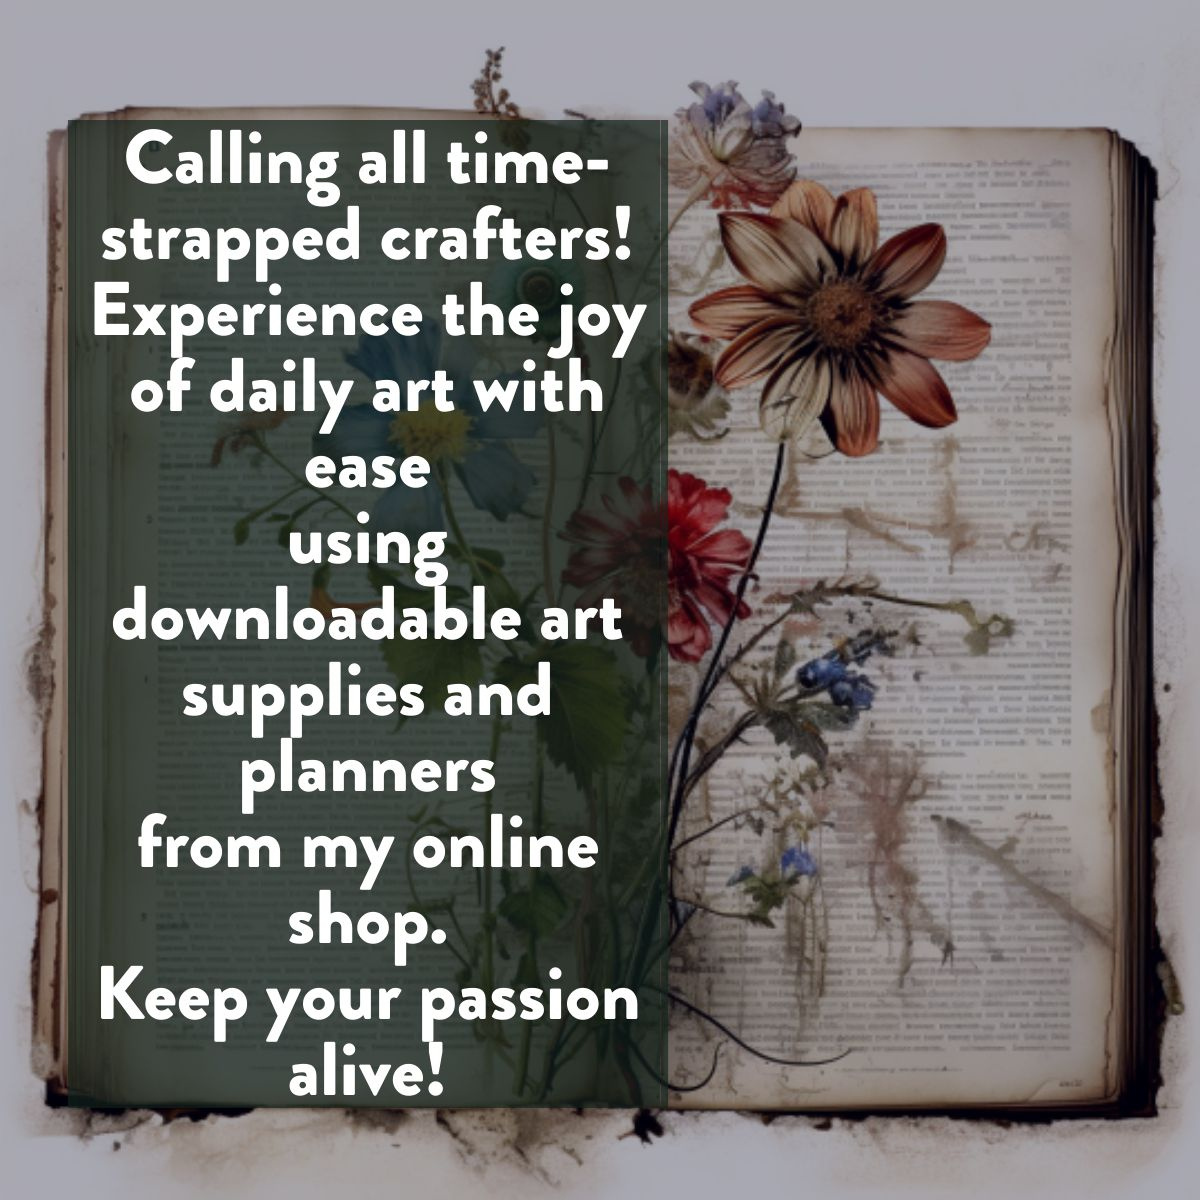 #craftersgonnacraft #jewelrymaker #artjournaler etsy.com/shop/toolsforc…